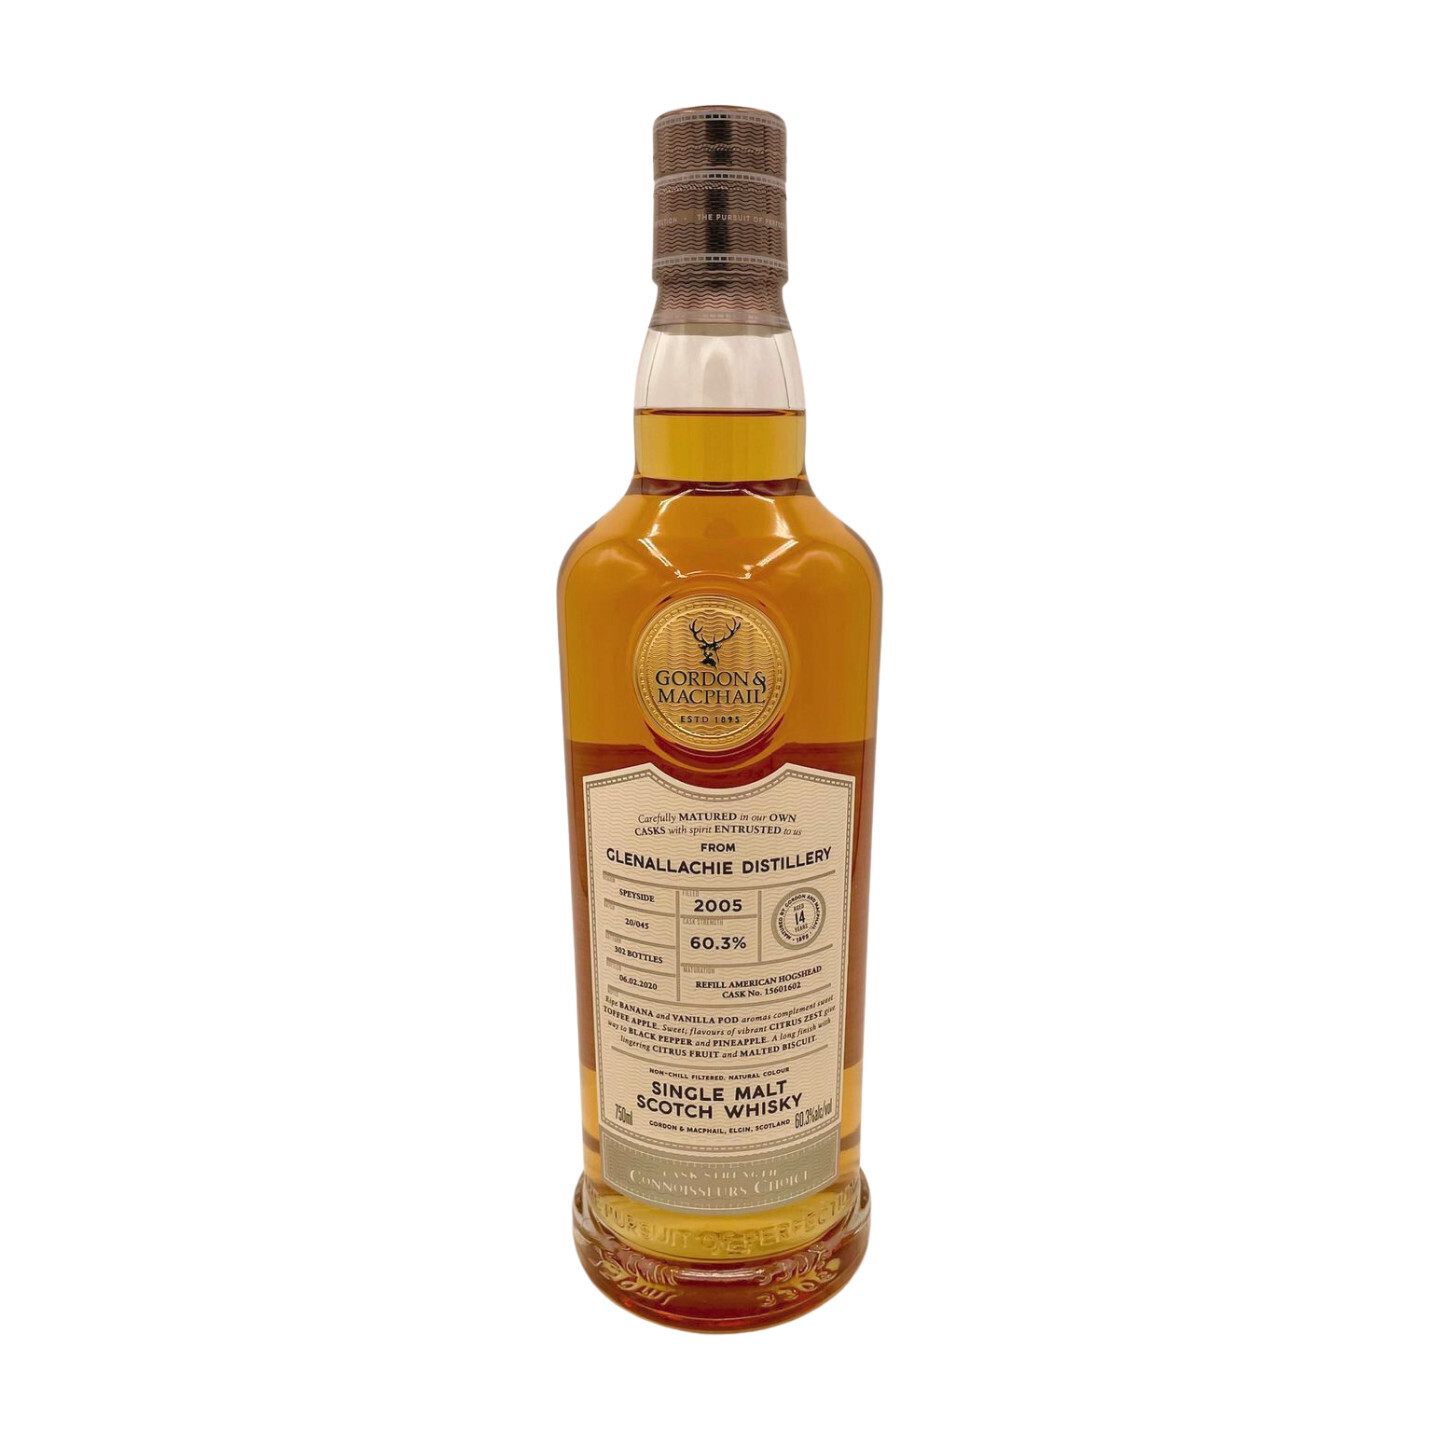 Glenallachie (Gordon & MacPhail) Speyside Single Malt Scotch Whisky Connoisseurs Choice 15 Yr (2005)